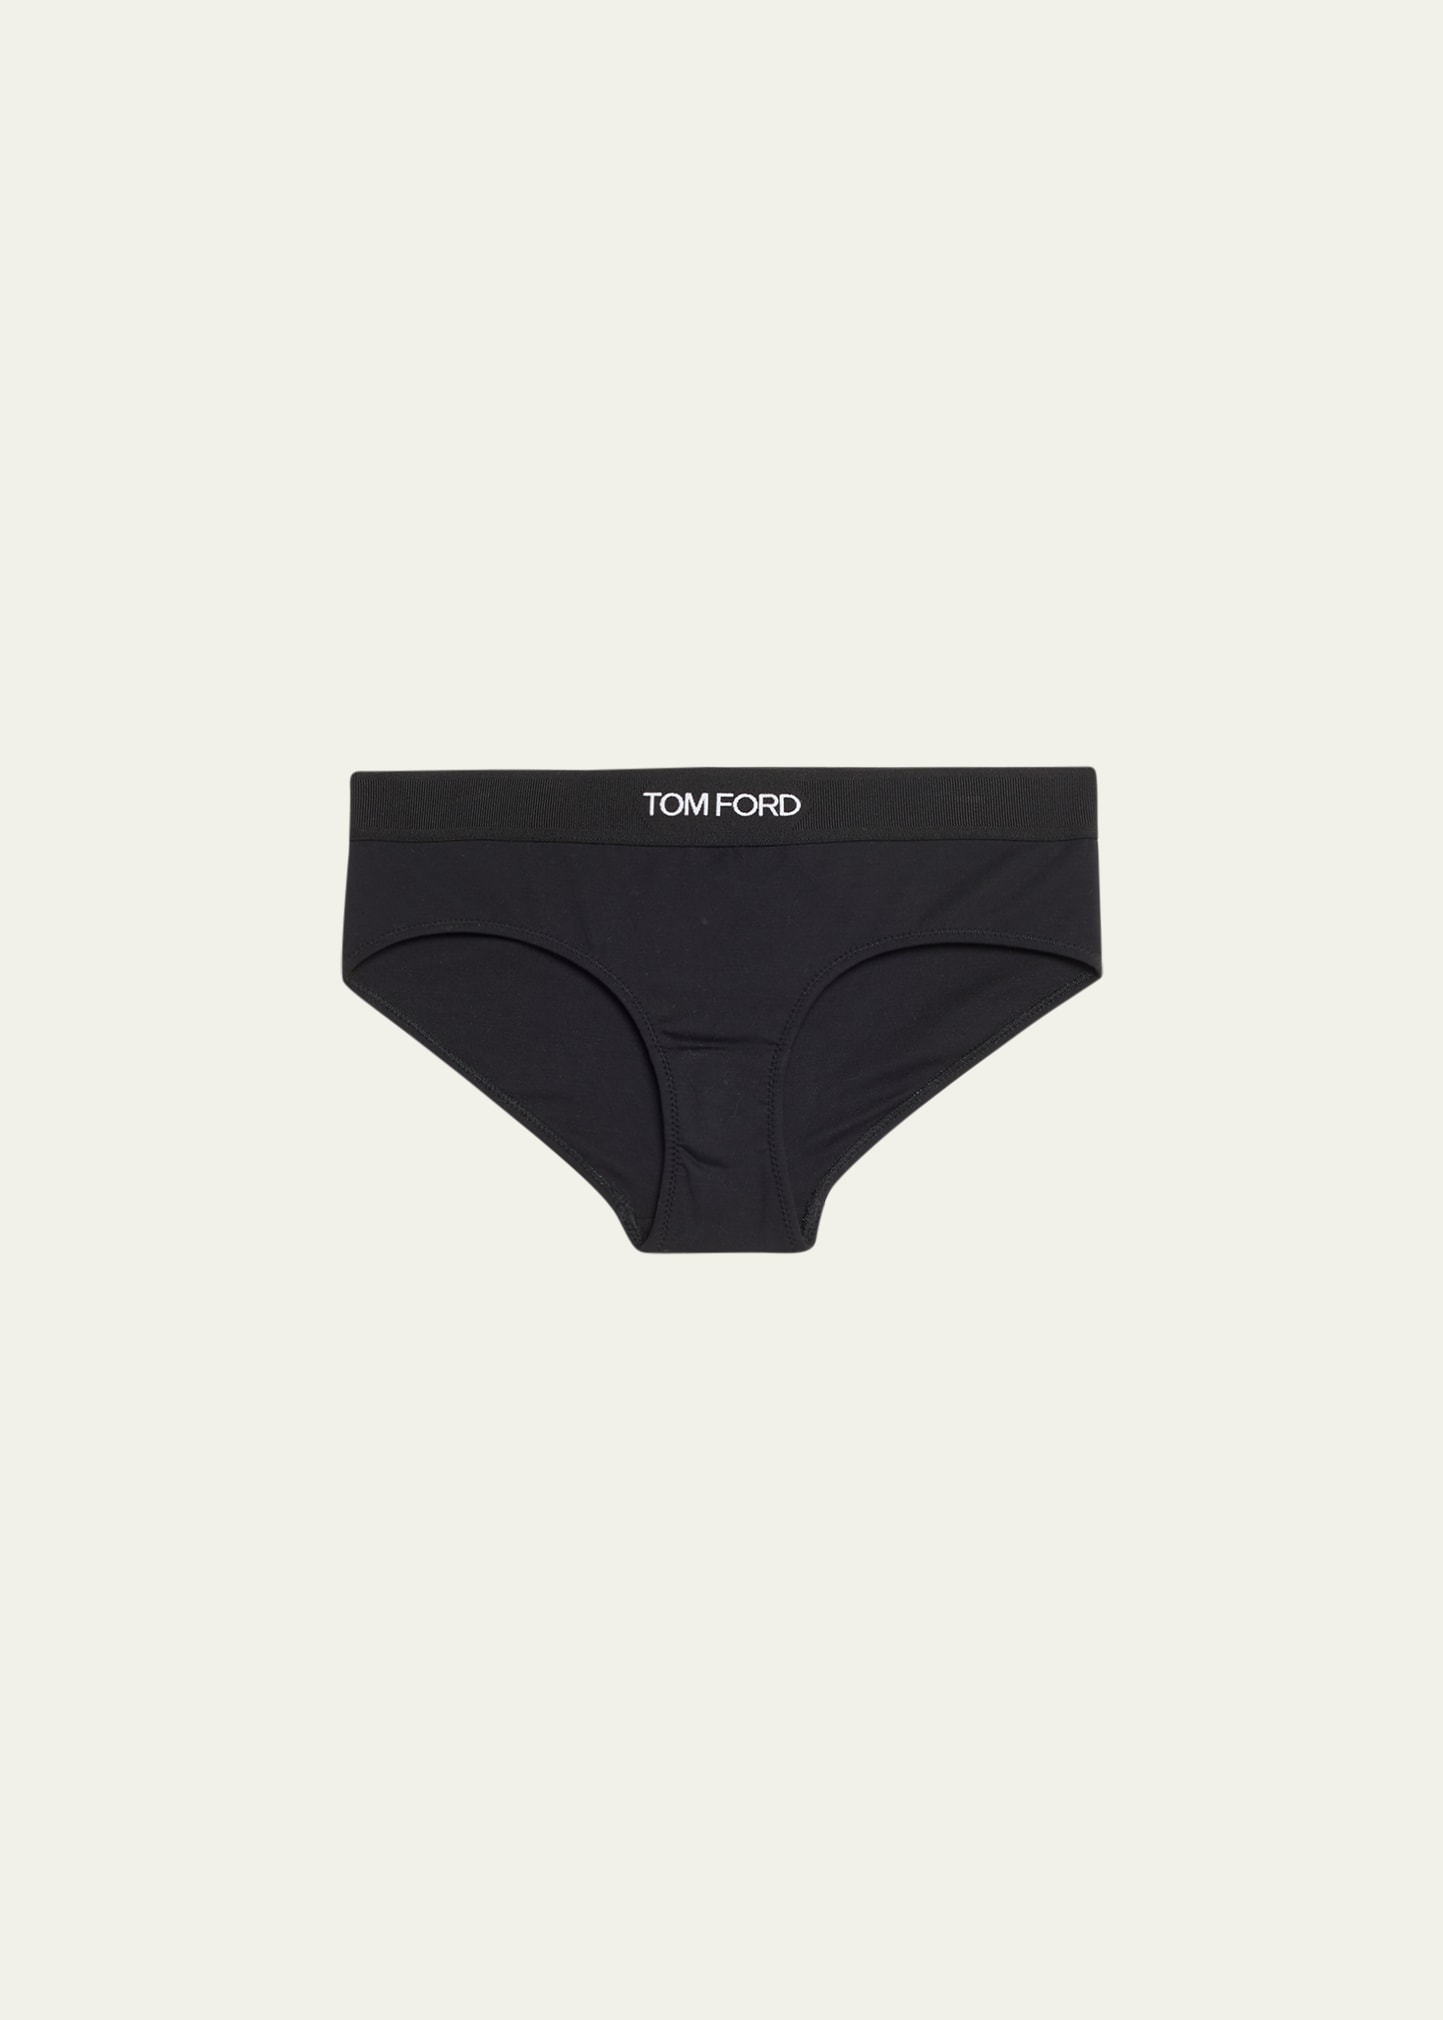 TOM FORD Logo Band Underwear - Bergdorf Goodman